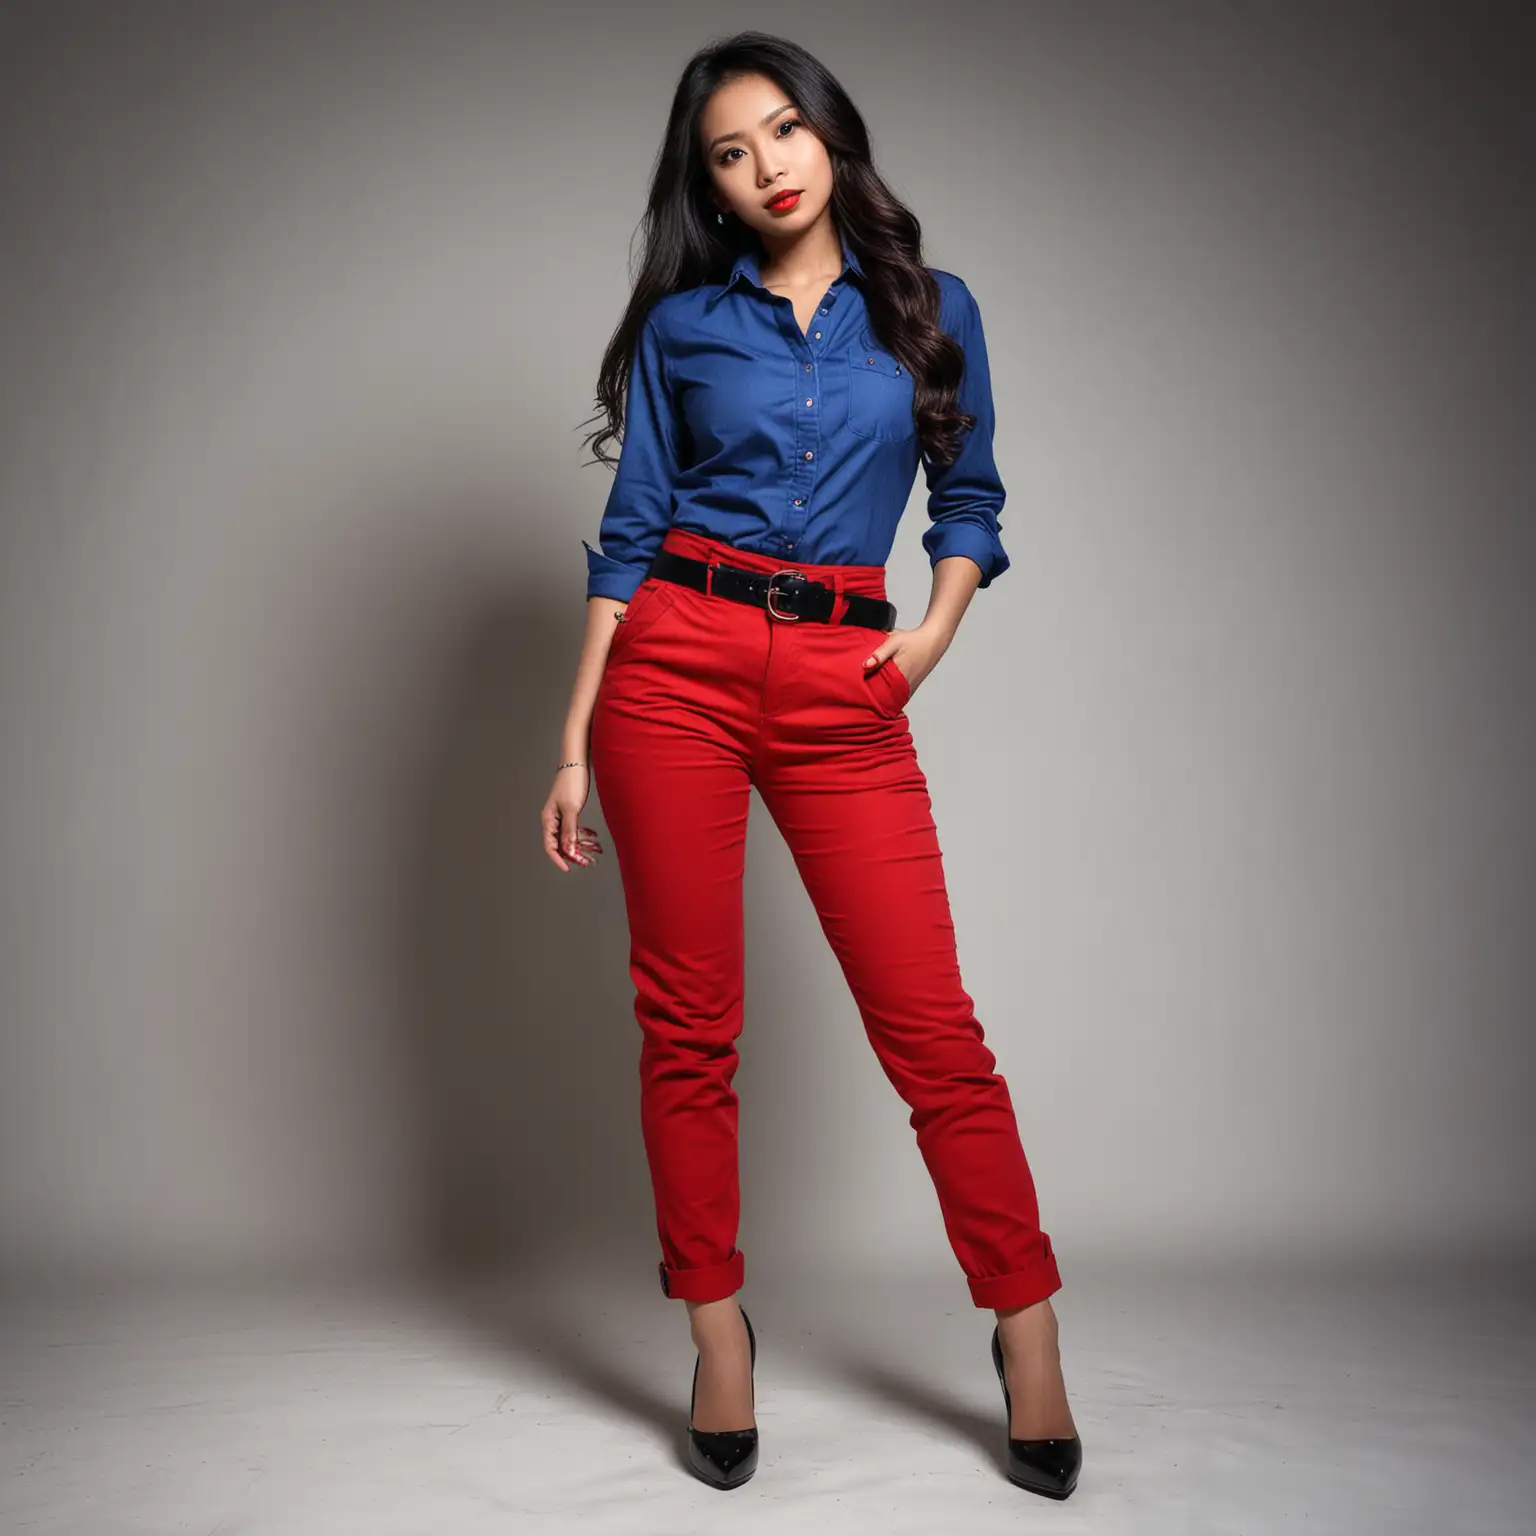 Malaysian-Female-Fashion-Blue-Shirt-Red-Pants-Red-Lipstick-Black-Hair